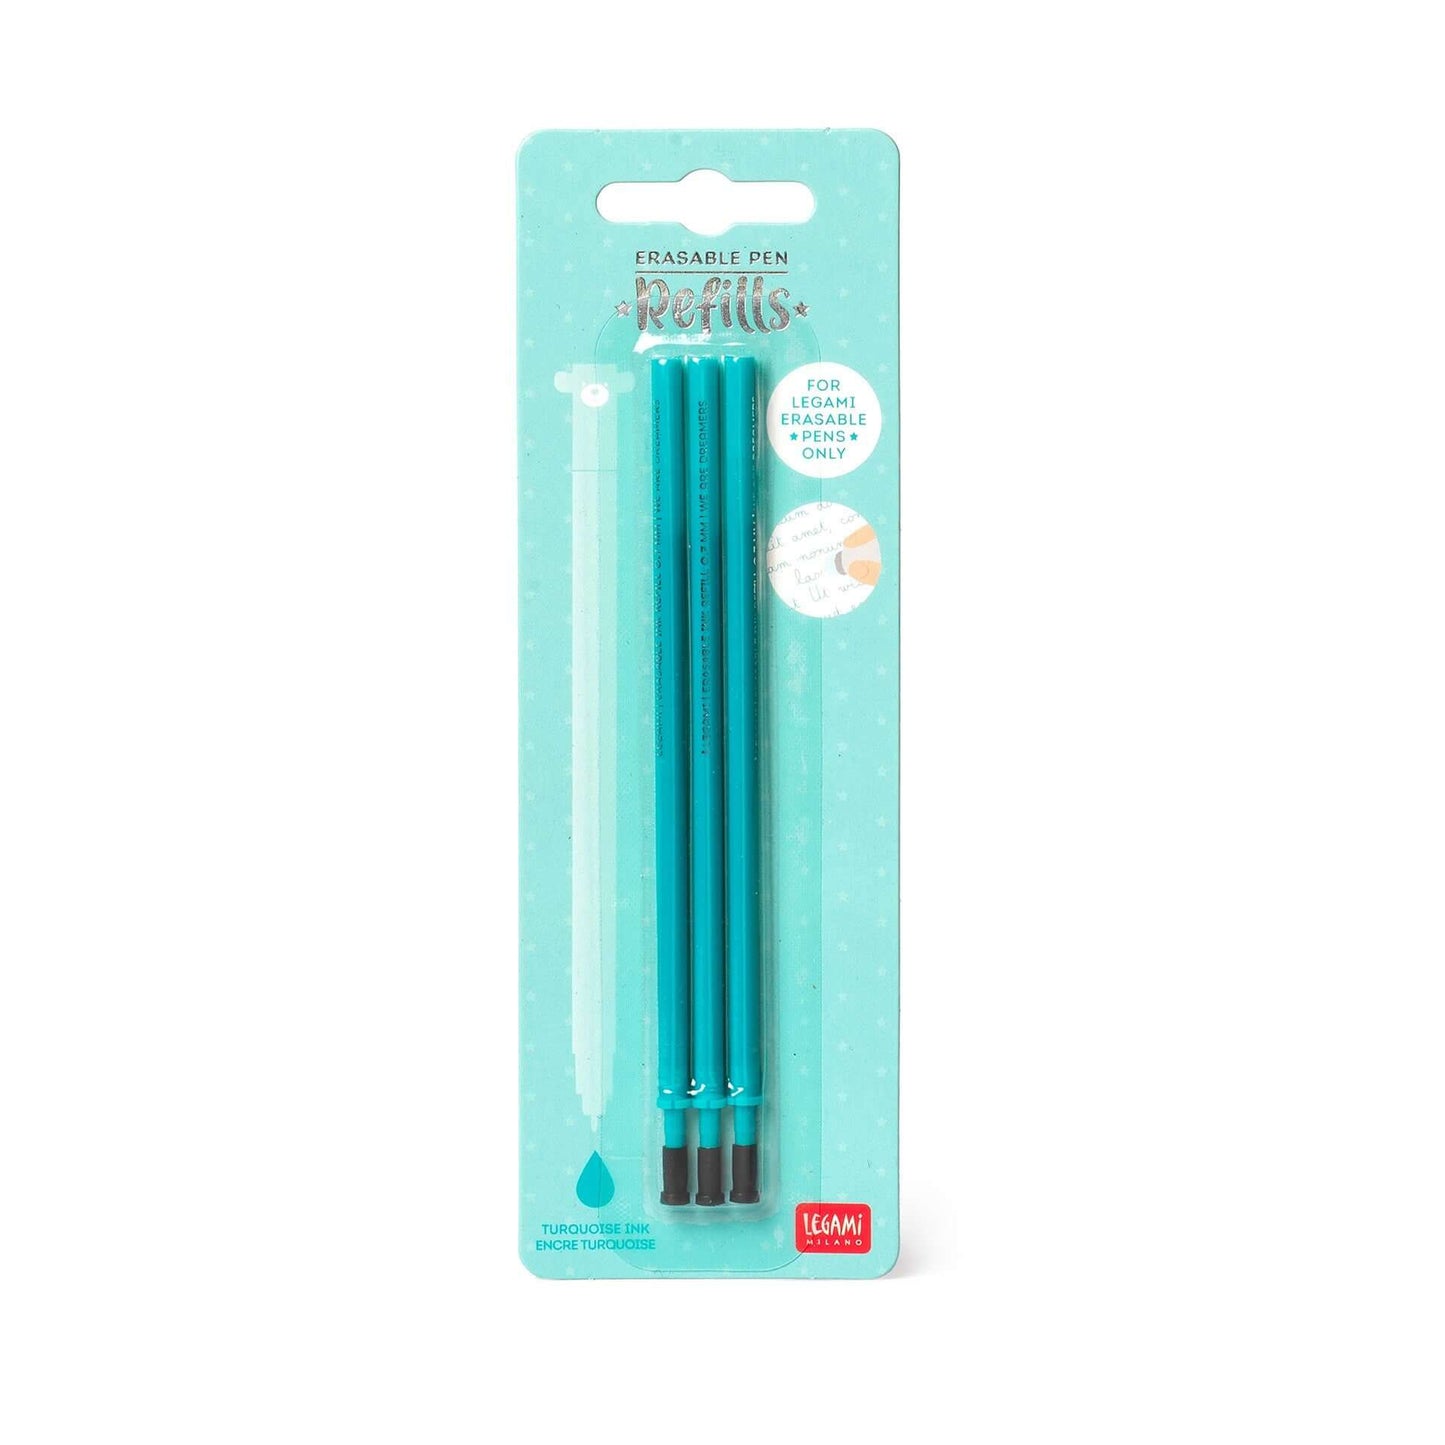 3 Turquoise Legami Erasable Pen Refills